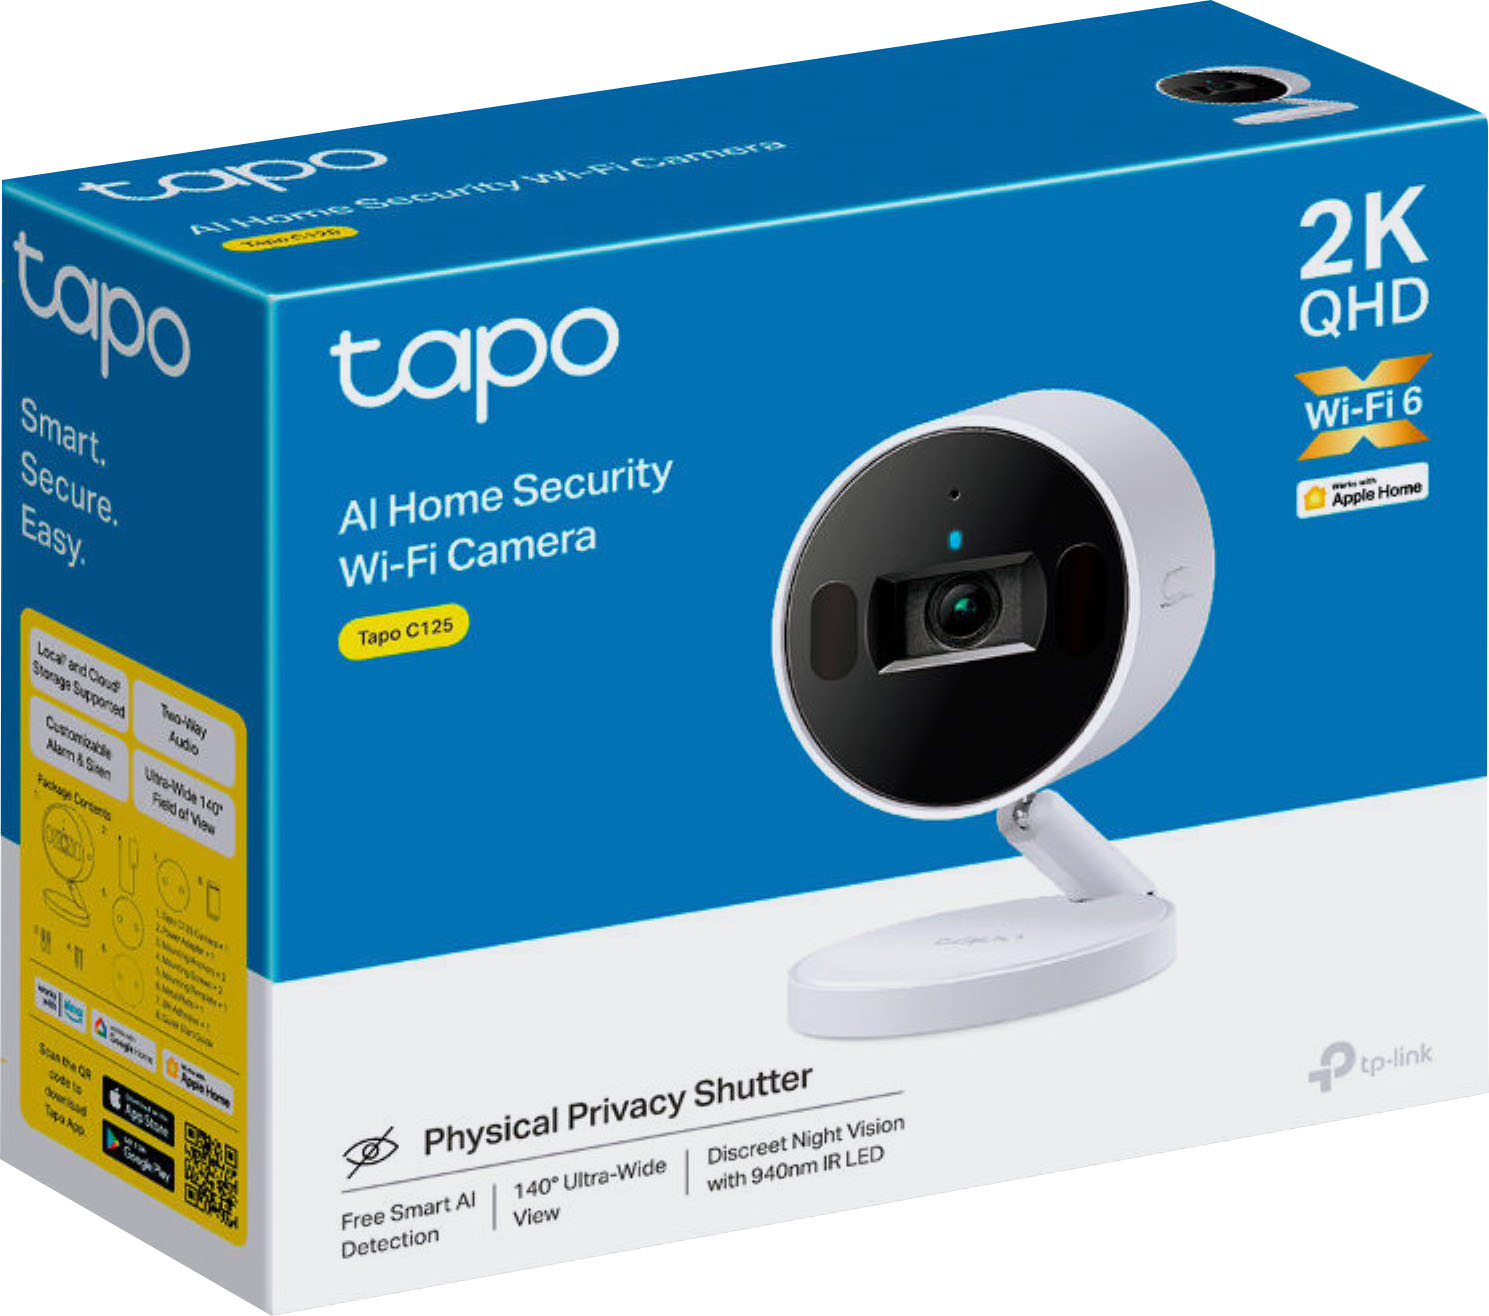 TP-Link Tapo C200 Wi-Fi Camera 1080p/ivoryitshop